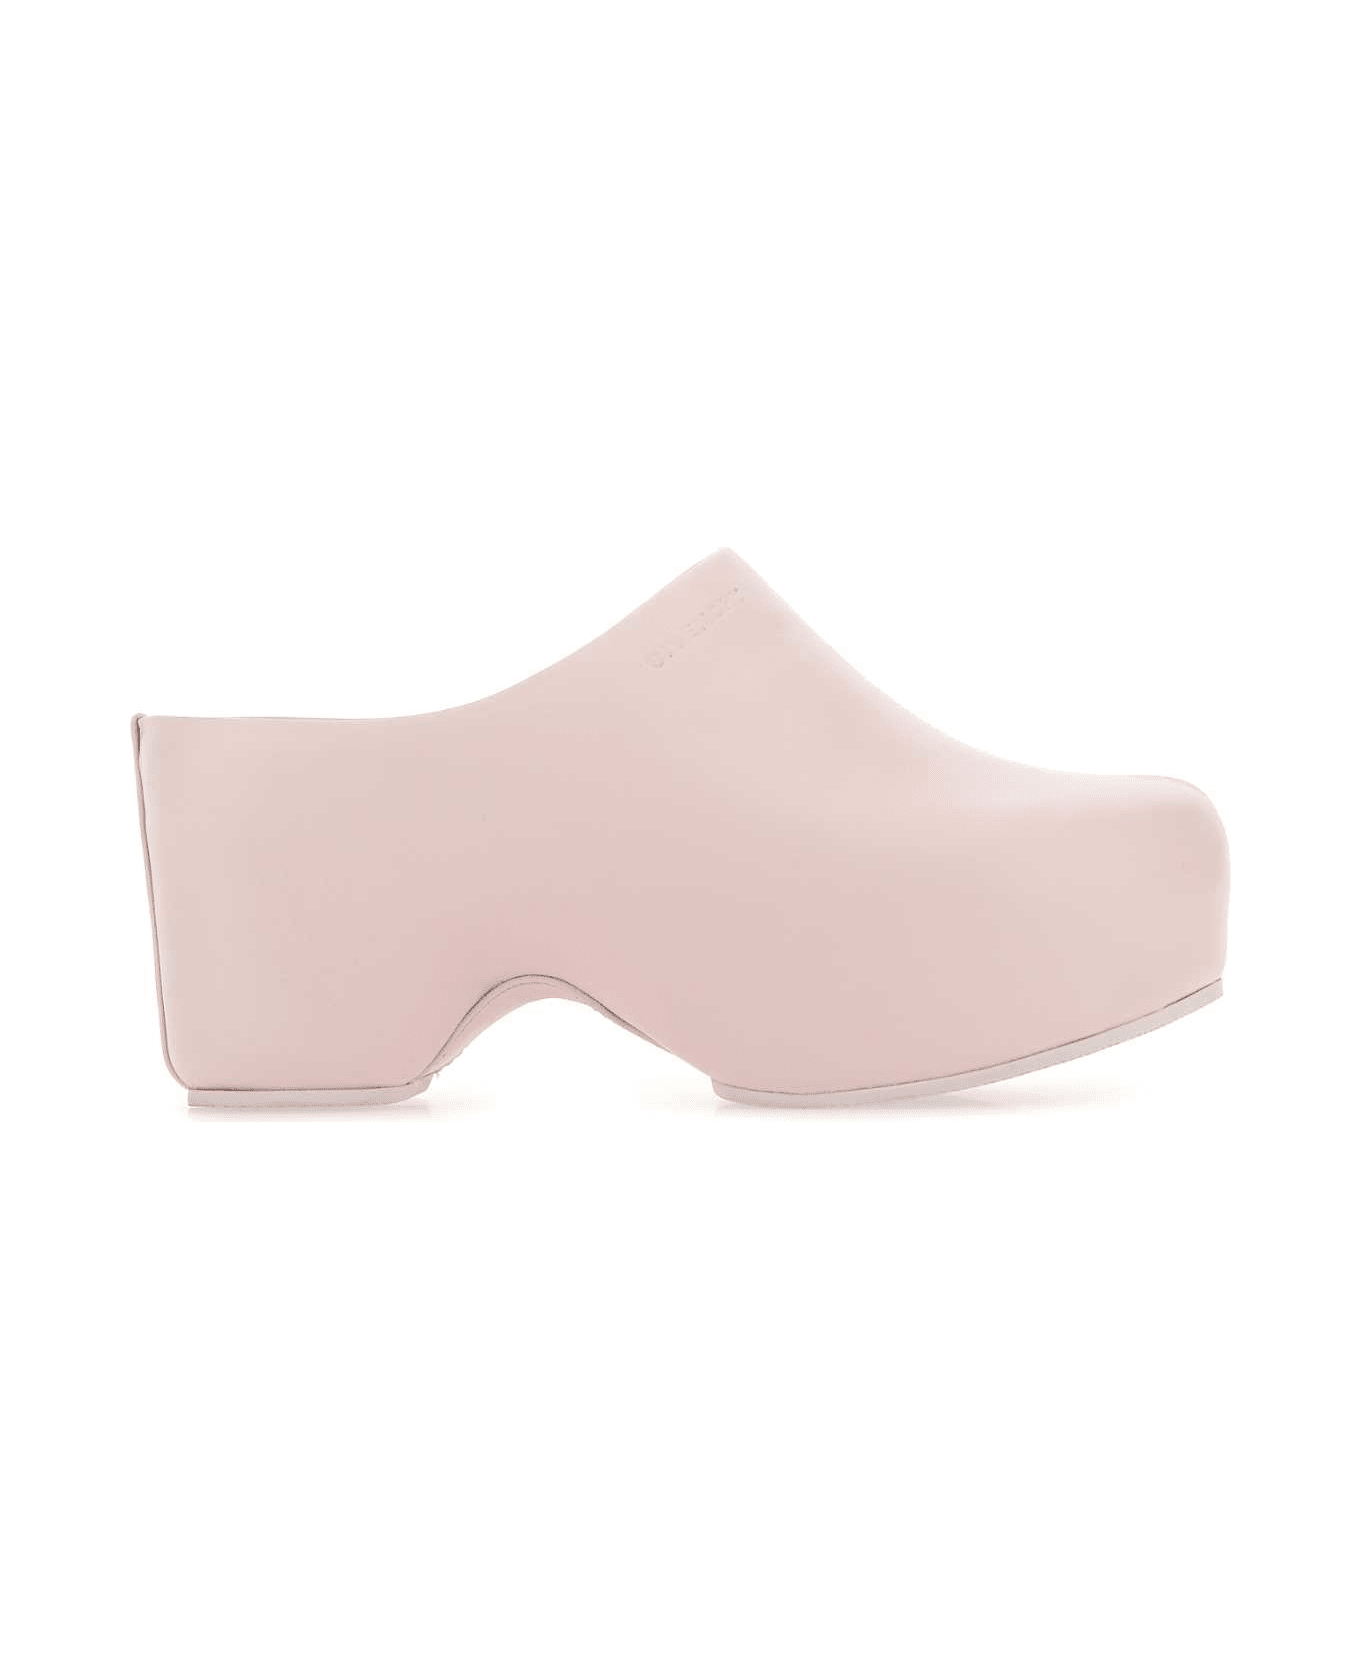 Givenchy Pastel Pink Leather G Clog Mules - 681 サンダル